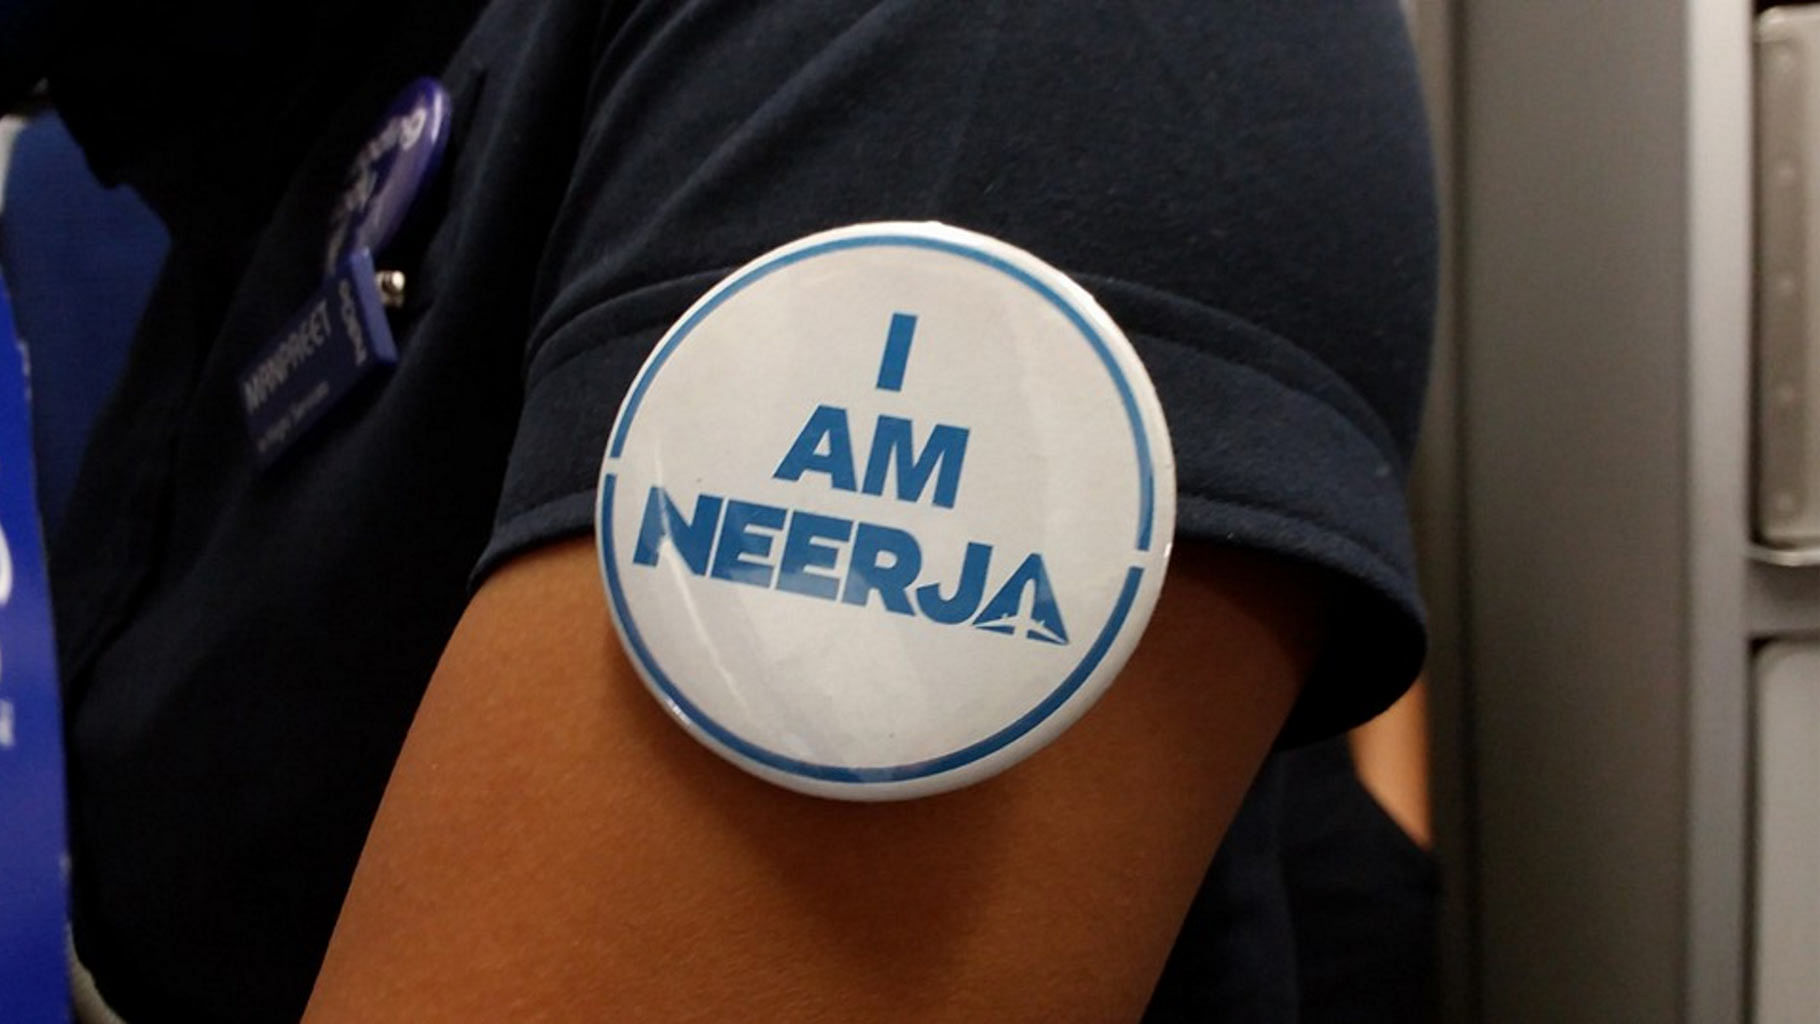 Indigo staffers sport an “I am Neerja” badge to remember the brave heart. (Photo Courtesy: <b><a href="https://www.facebook.com/patricia.mukhim?fref=nf">Patricia Mukhim</a></b>)